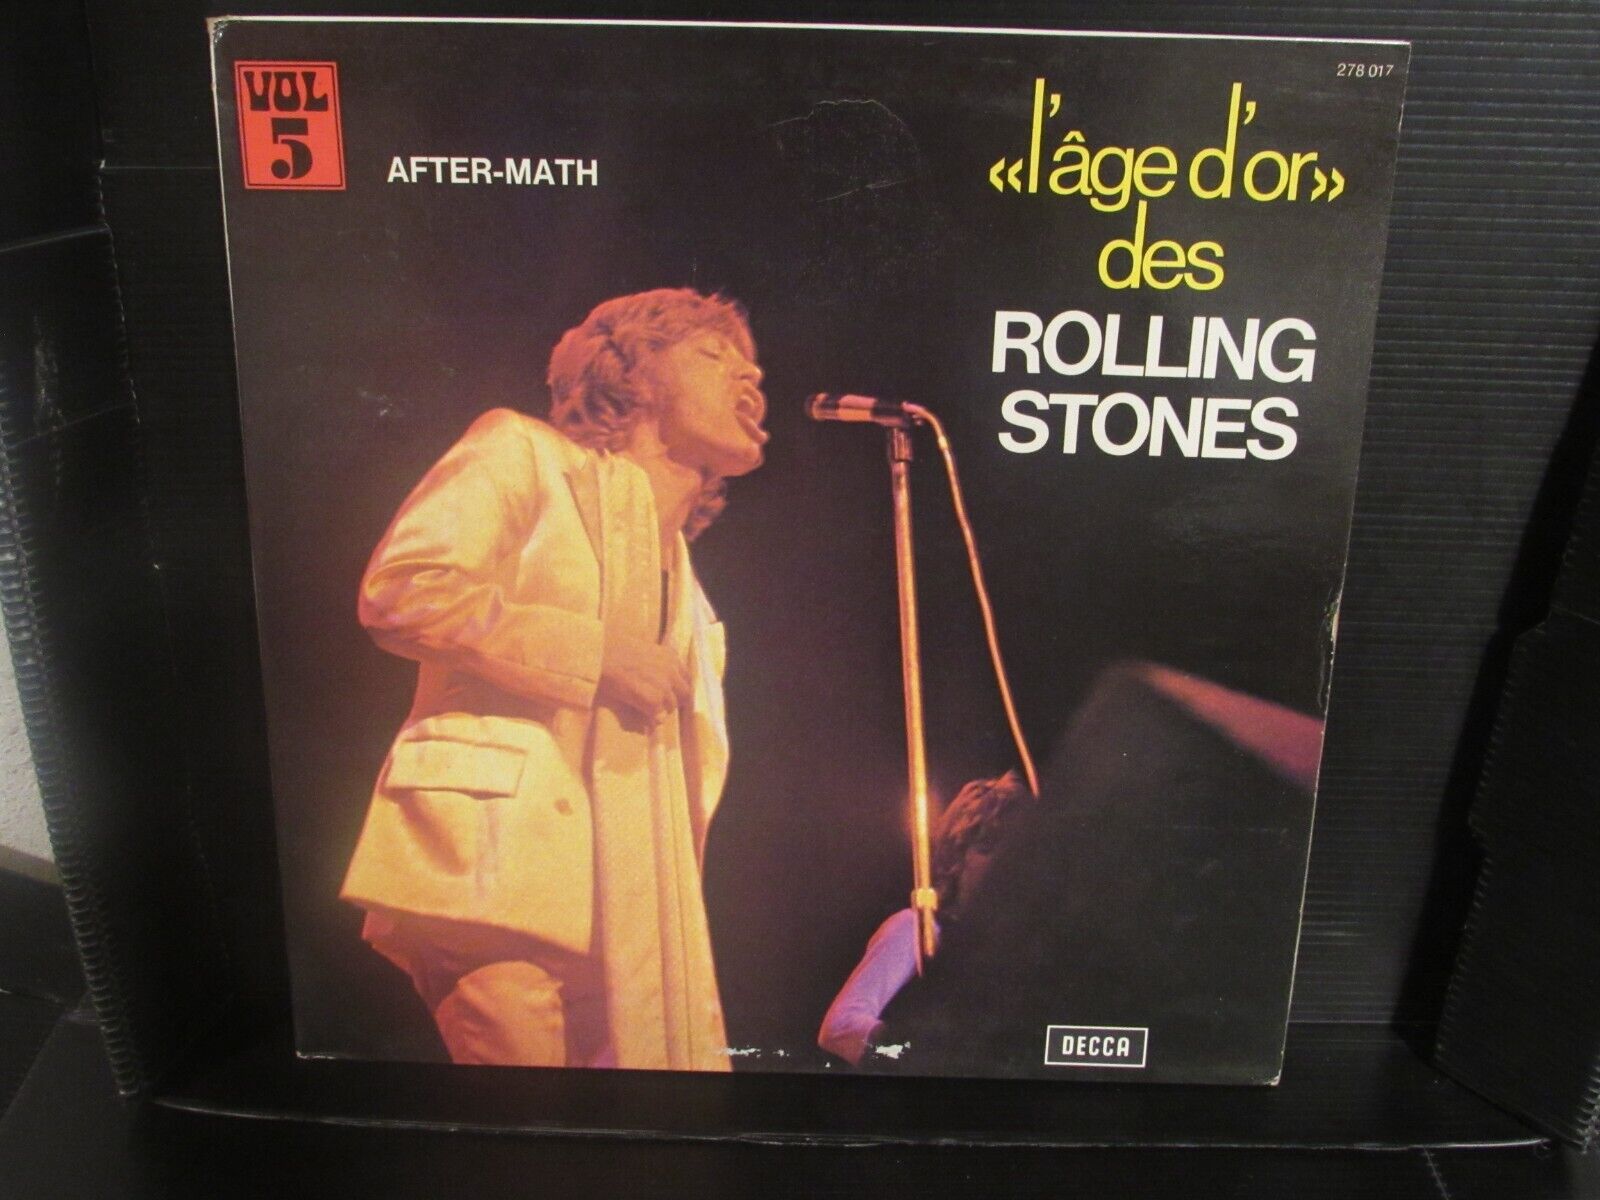 Rolling Stones Vol 5 After-Math (Decca zal 7.209)1966 Lp France